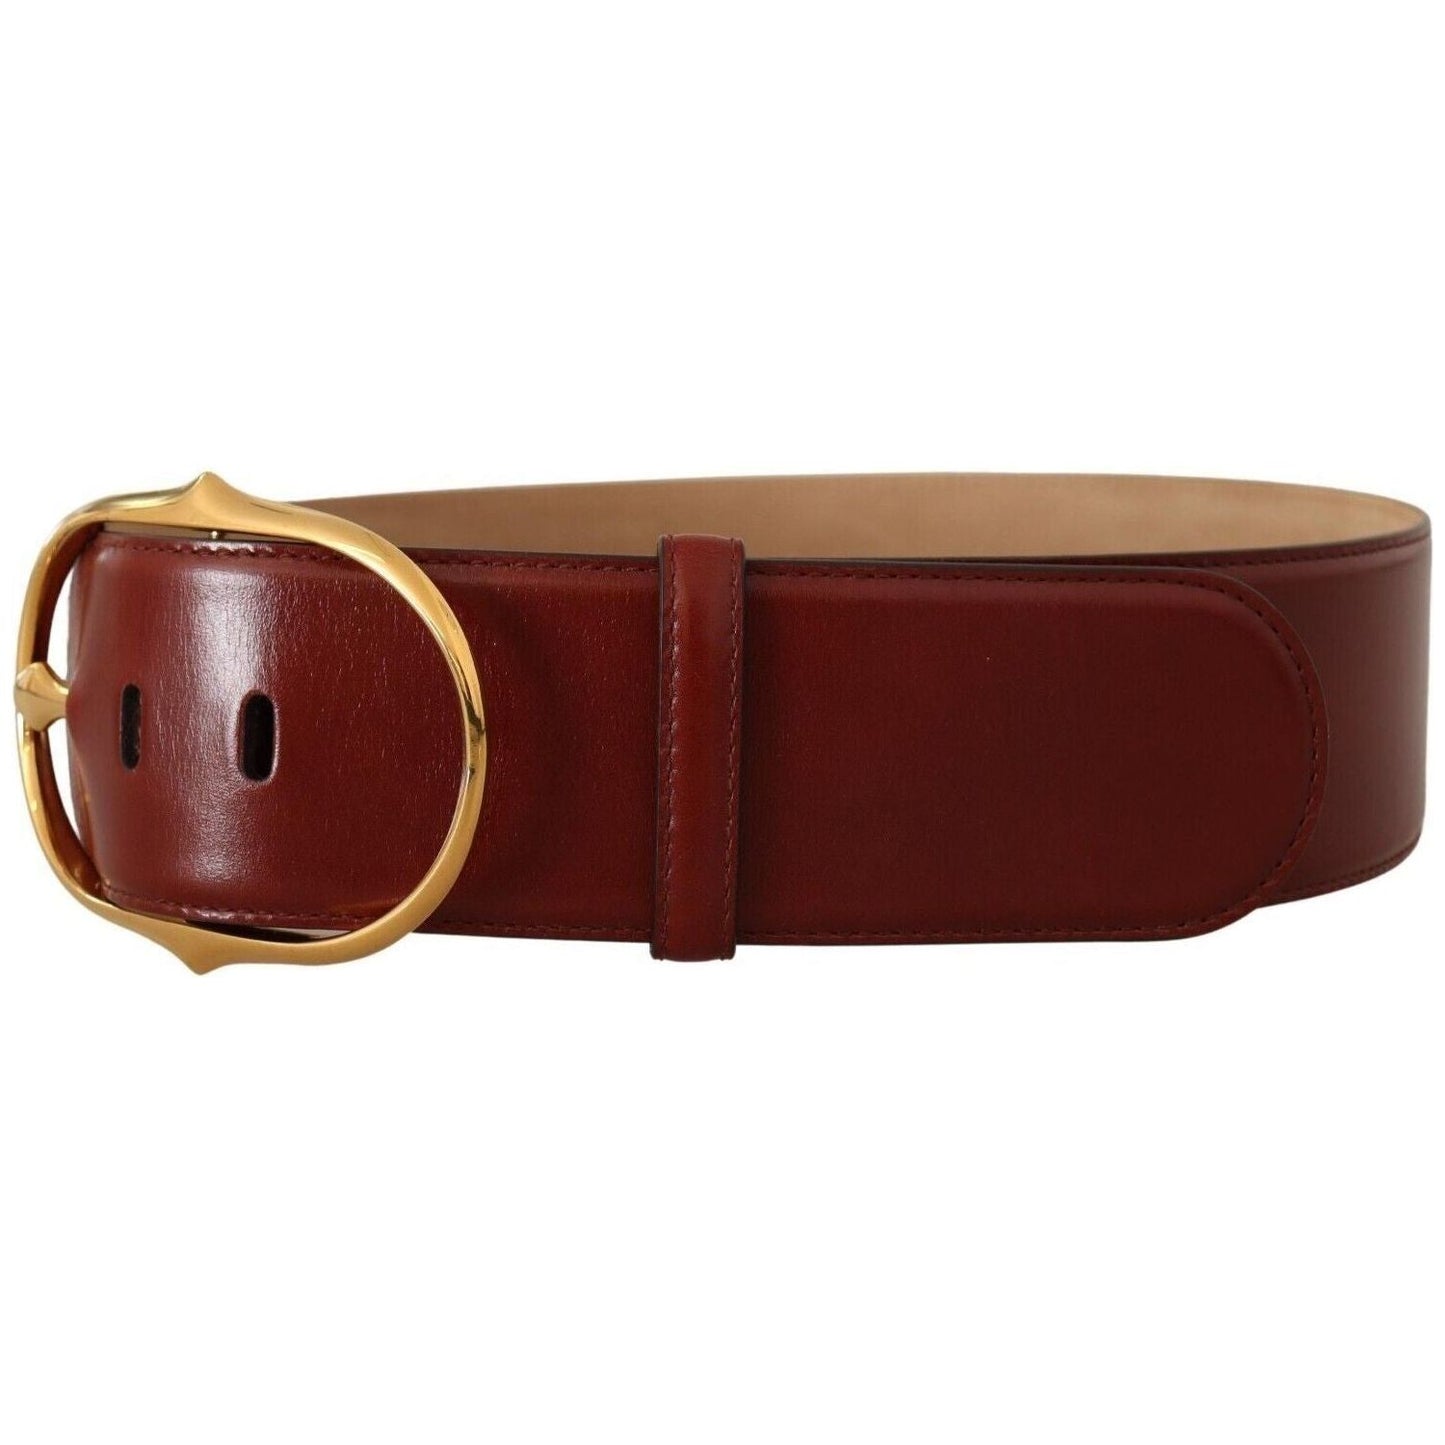 Dolce & Gabbana Elegant Maroon Leather Belt with Gold Buckle maroon-leather-gold-metal-oval-buckle-belt WOMAN BELTS s-l1600-1-264-5207b7da-077.jpg